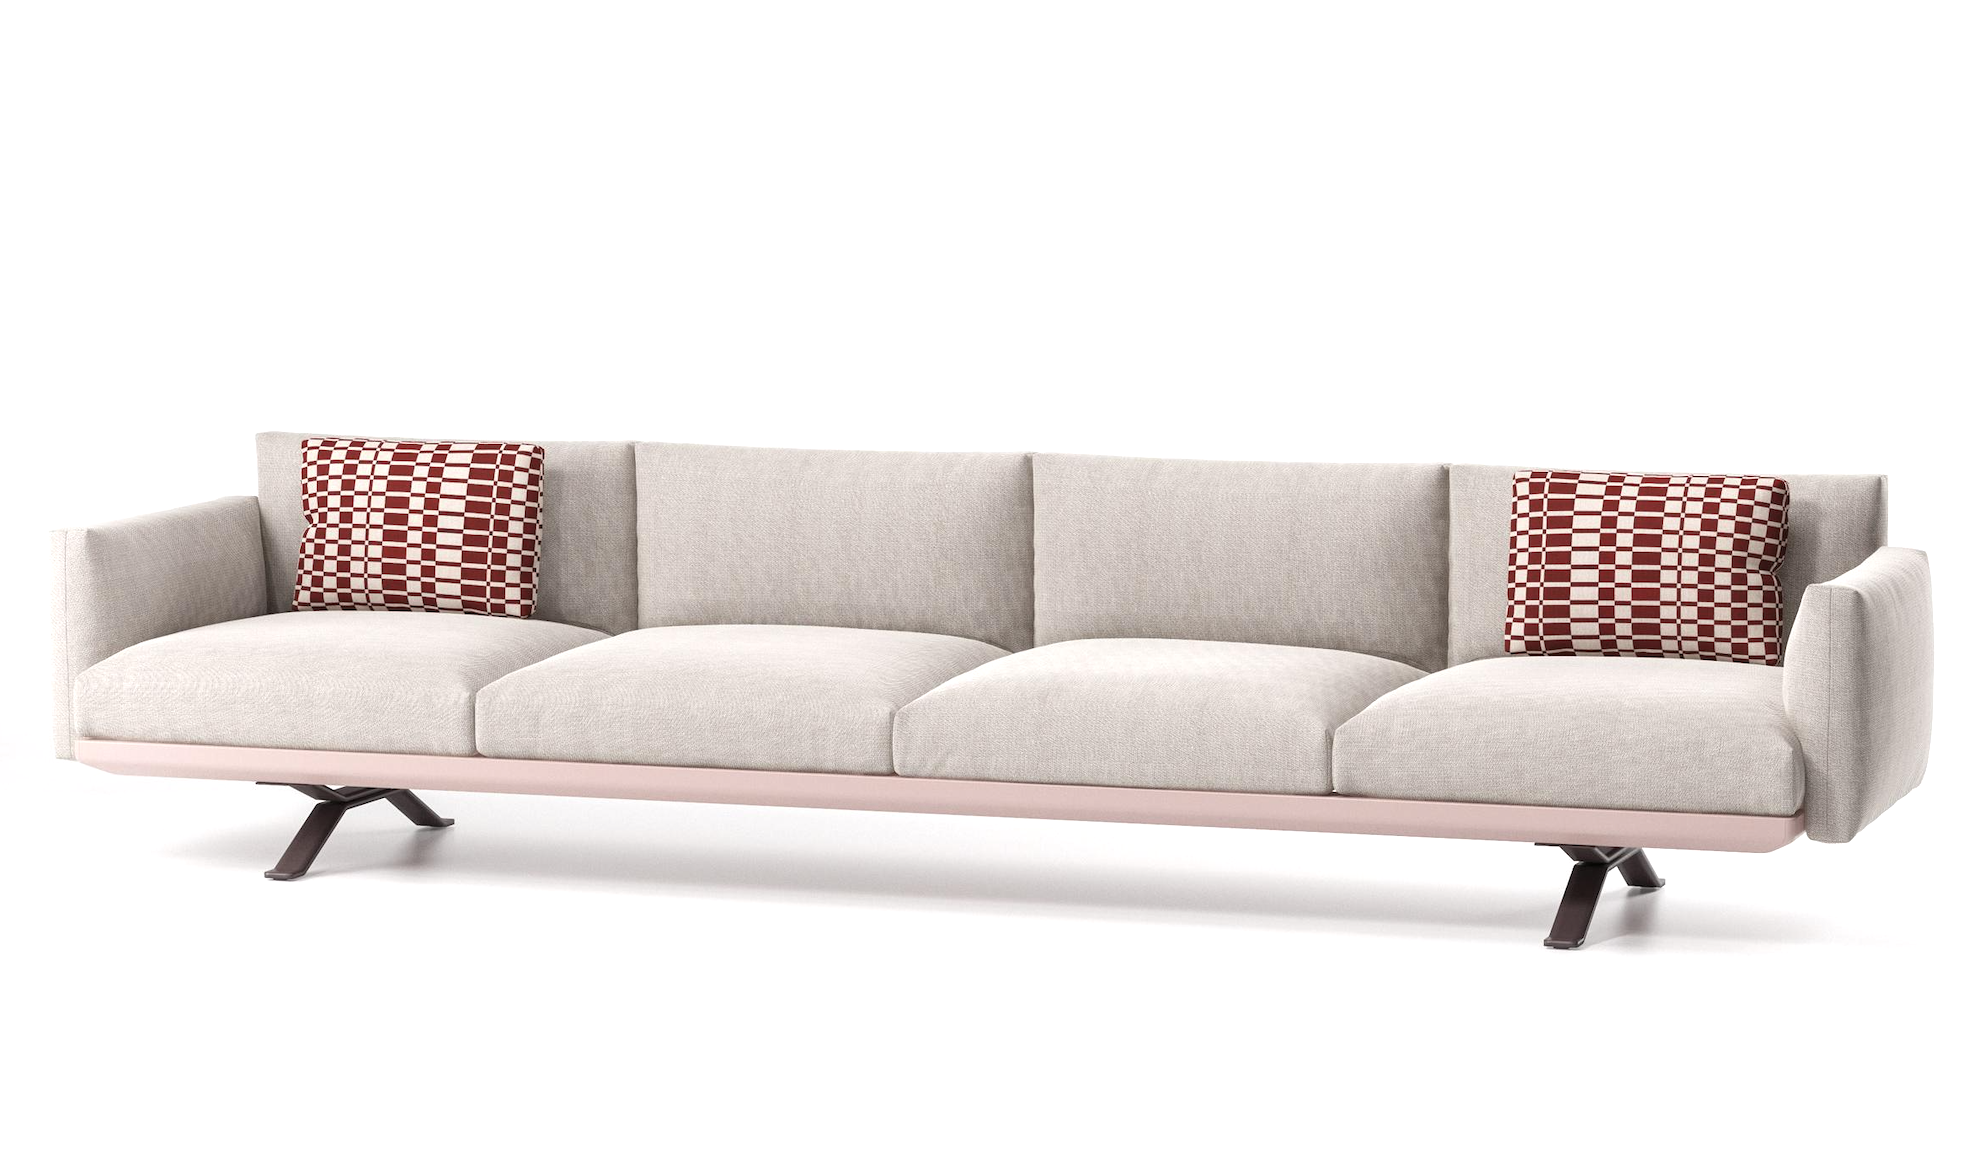 Product Image Boma 4 seat Sofa